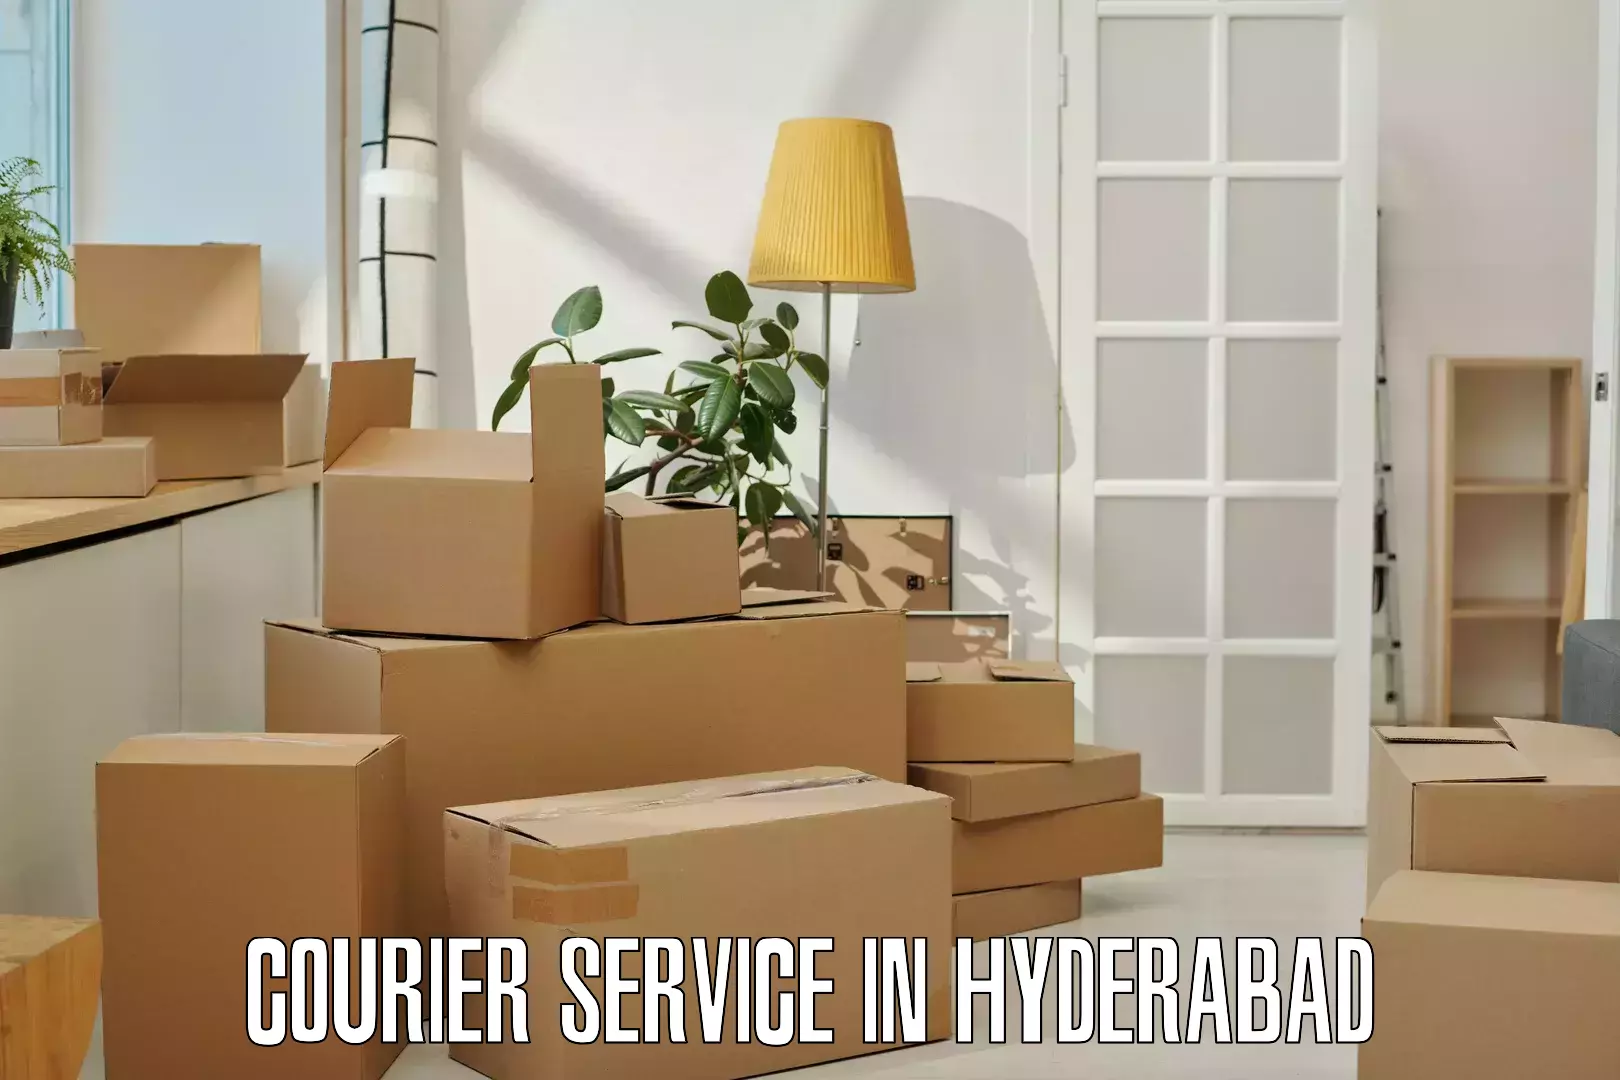 High-capacity parcel service in Hyderabad